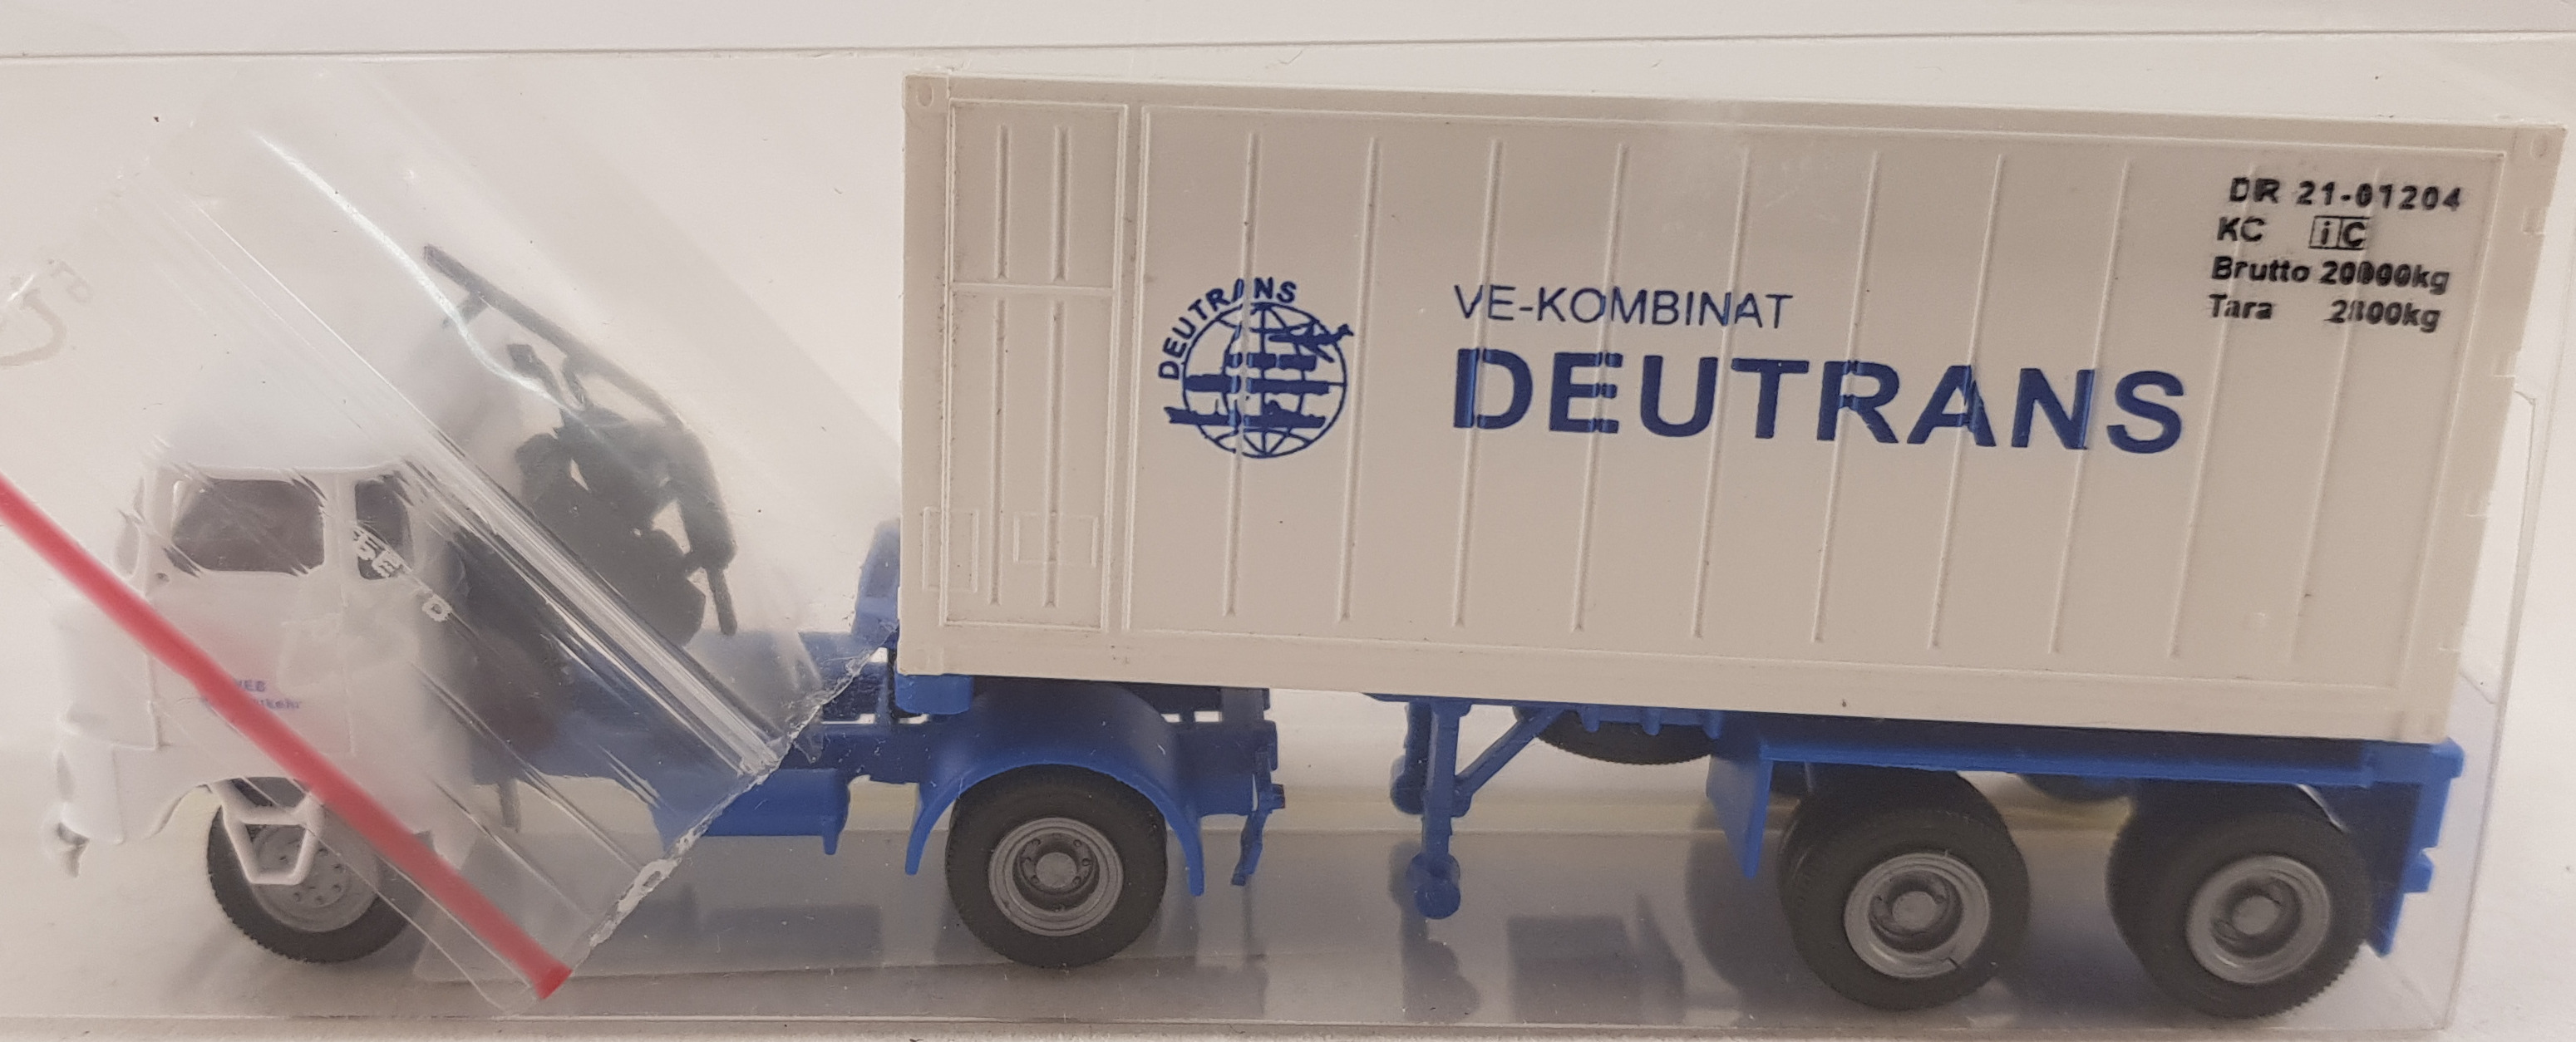 SES 14105404 Lastbil IFA Deutrans Container, skala H0, K14